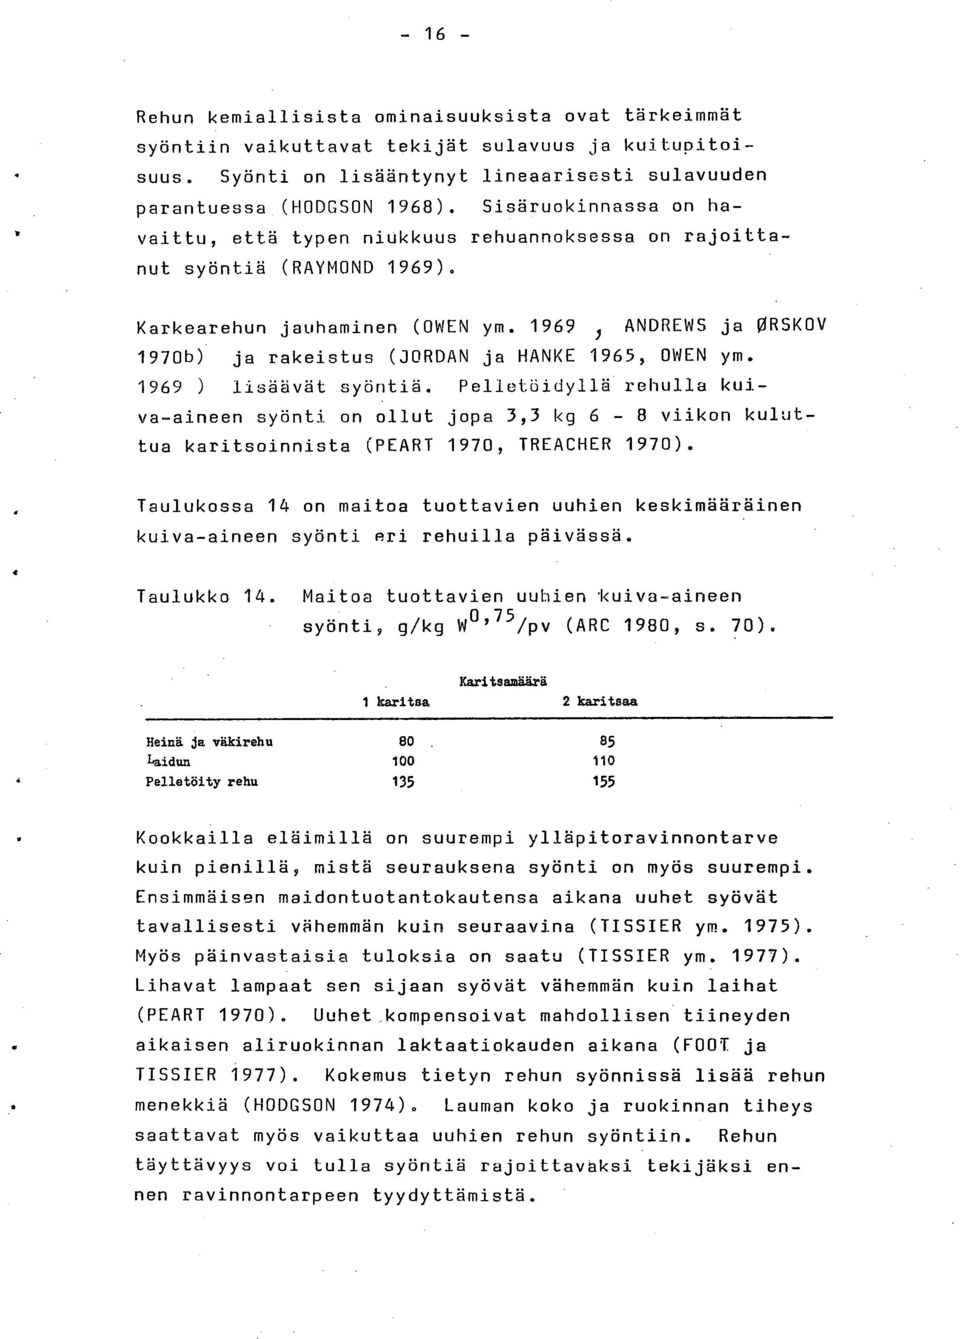 1969 5 ANDREWS ja ORSKOV 1970b) ja rakeistus (JORDAN ja HANKE 1965, OWEN ym. 1969 ) lisäävät syöntiä.